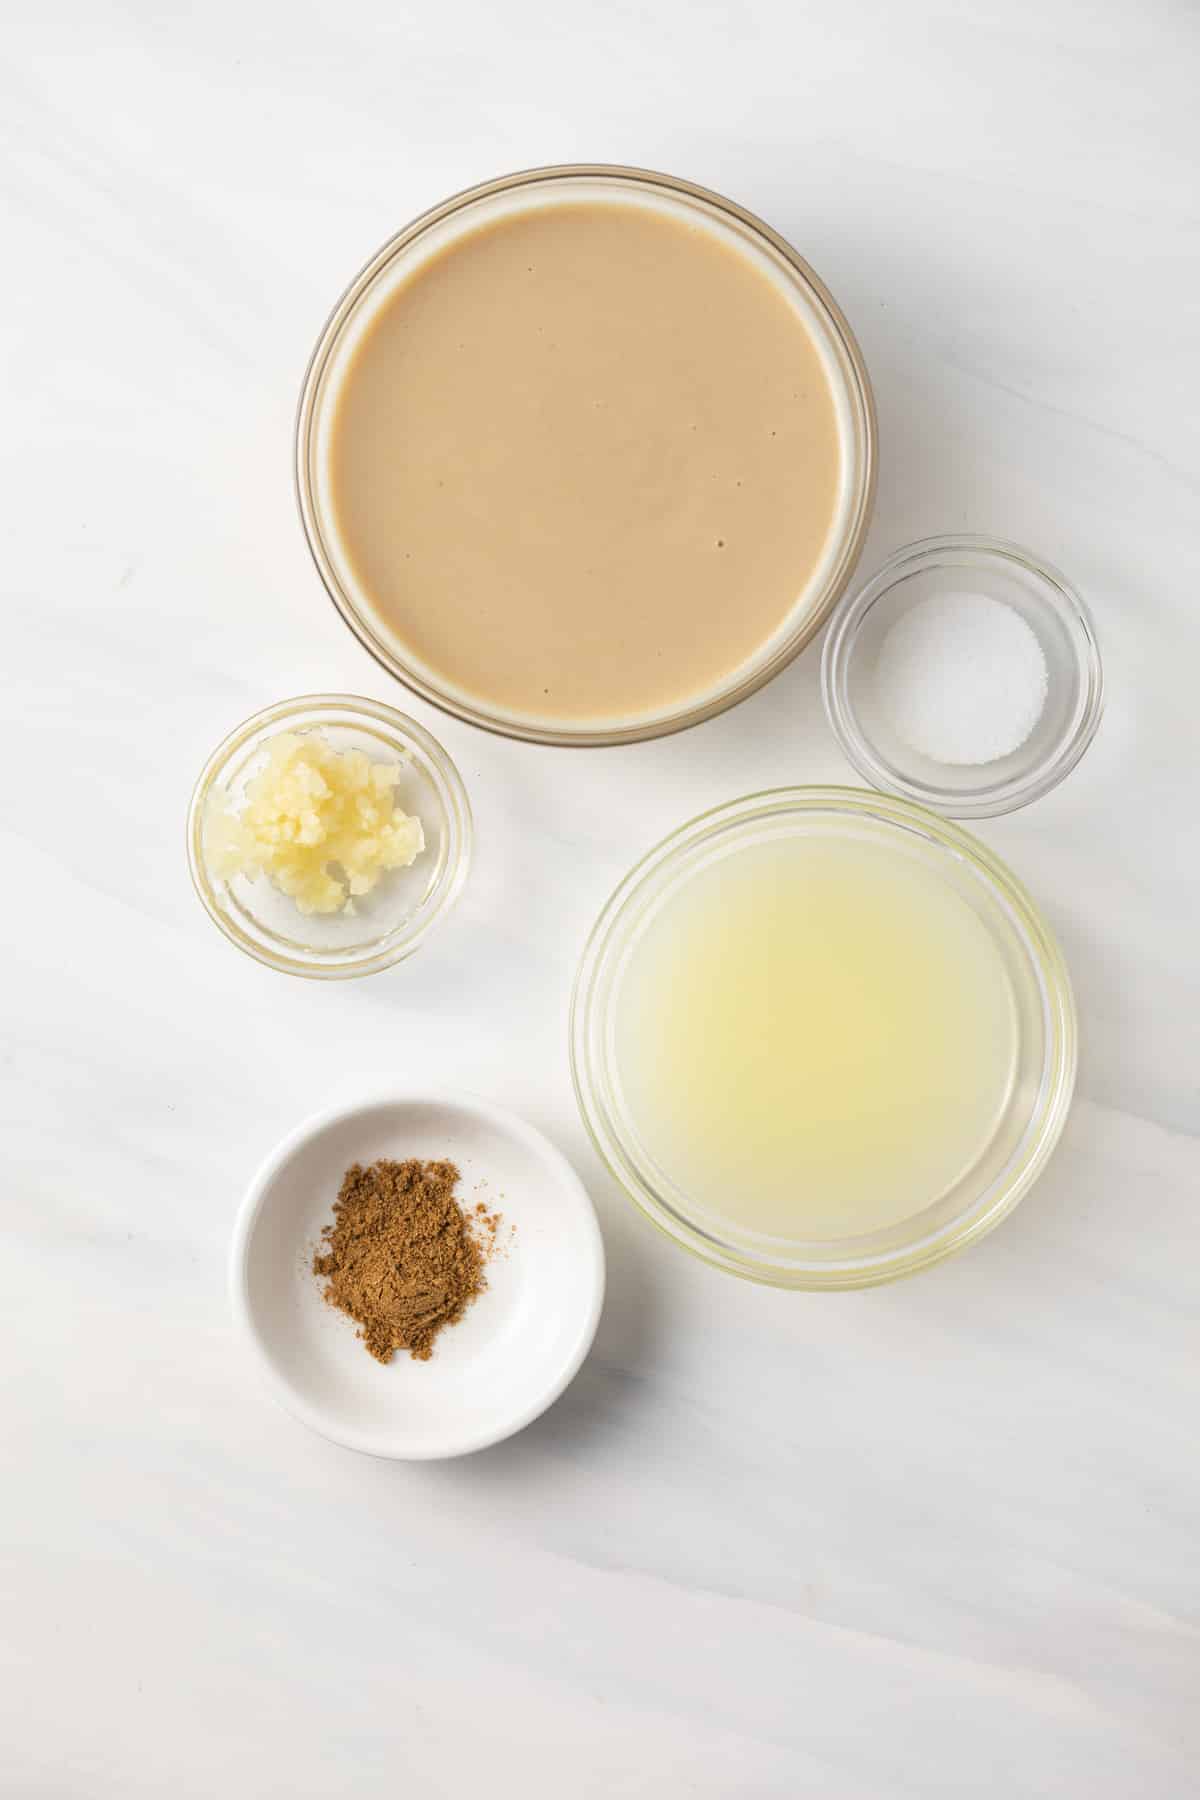 Ingredients for creamy tahini sauce